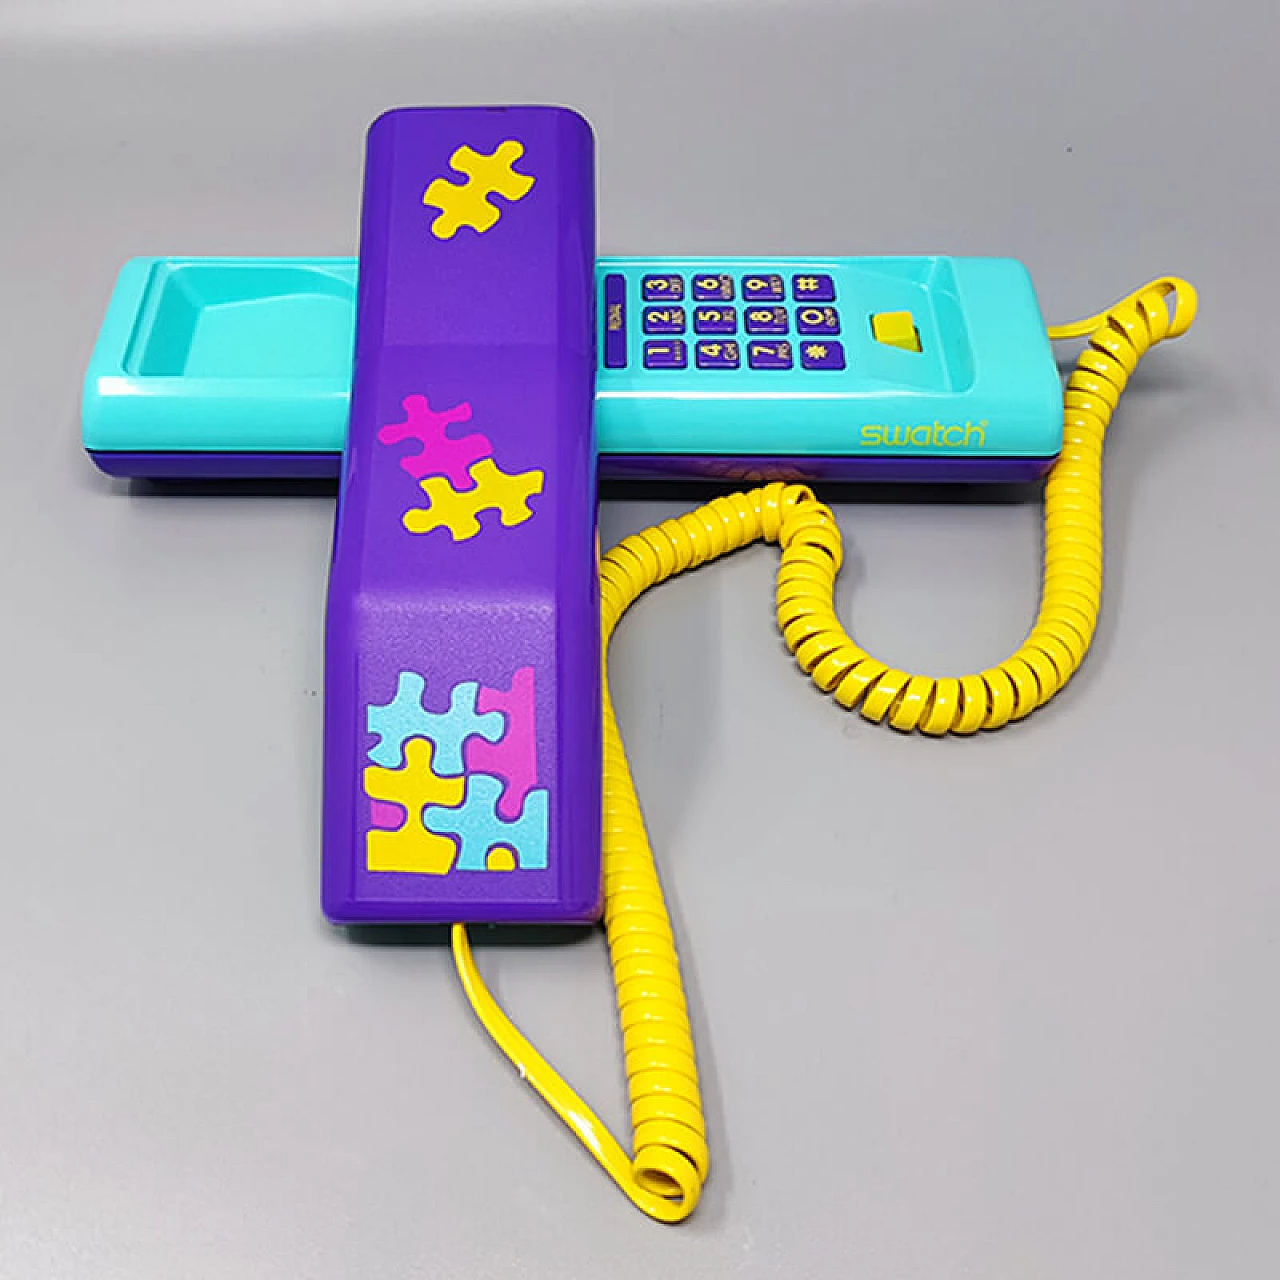 Puzzle Swatch Twin Phone landline phone, 1980s 3